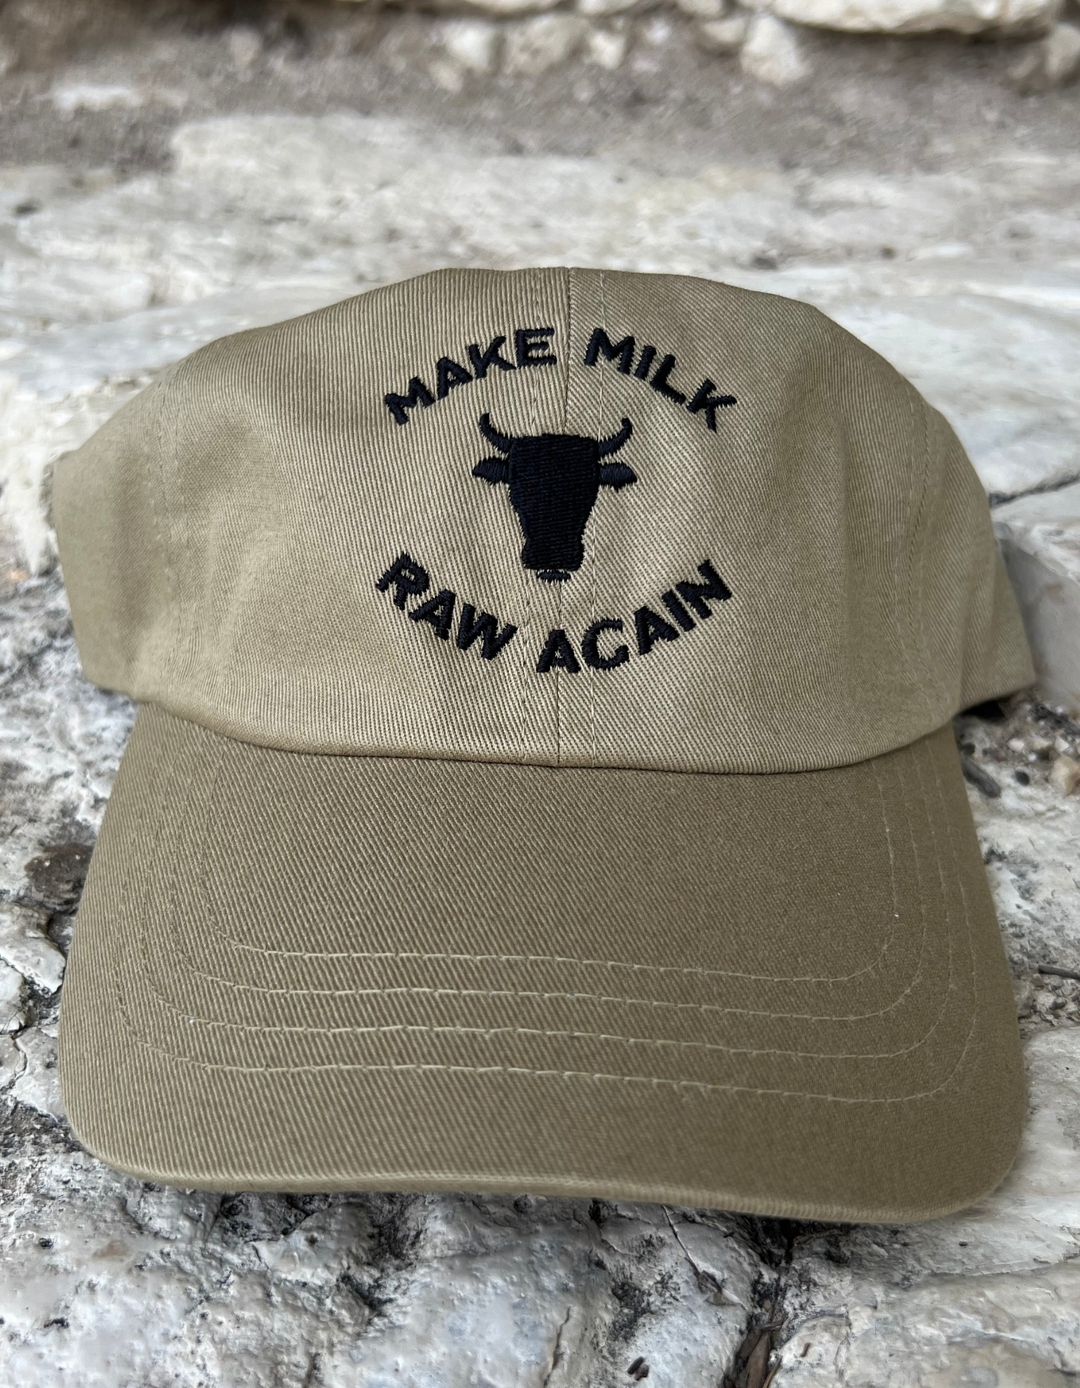 Make Milk Raw Again Hats